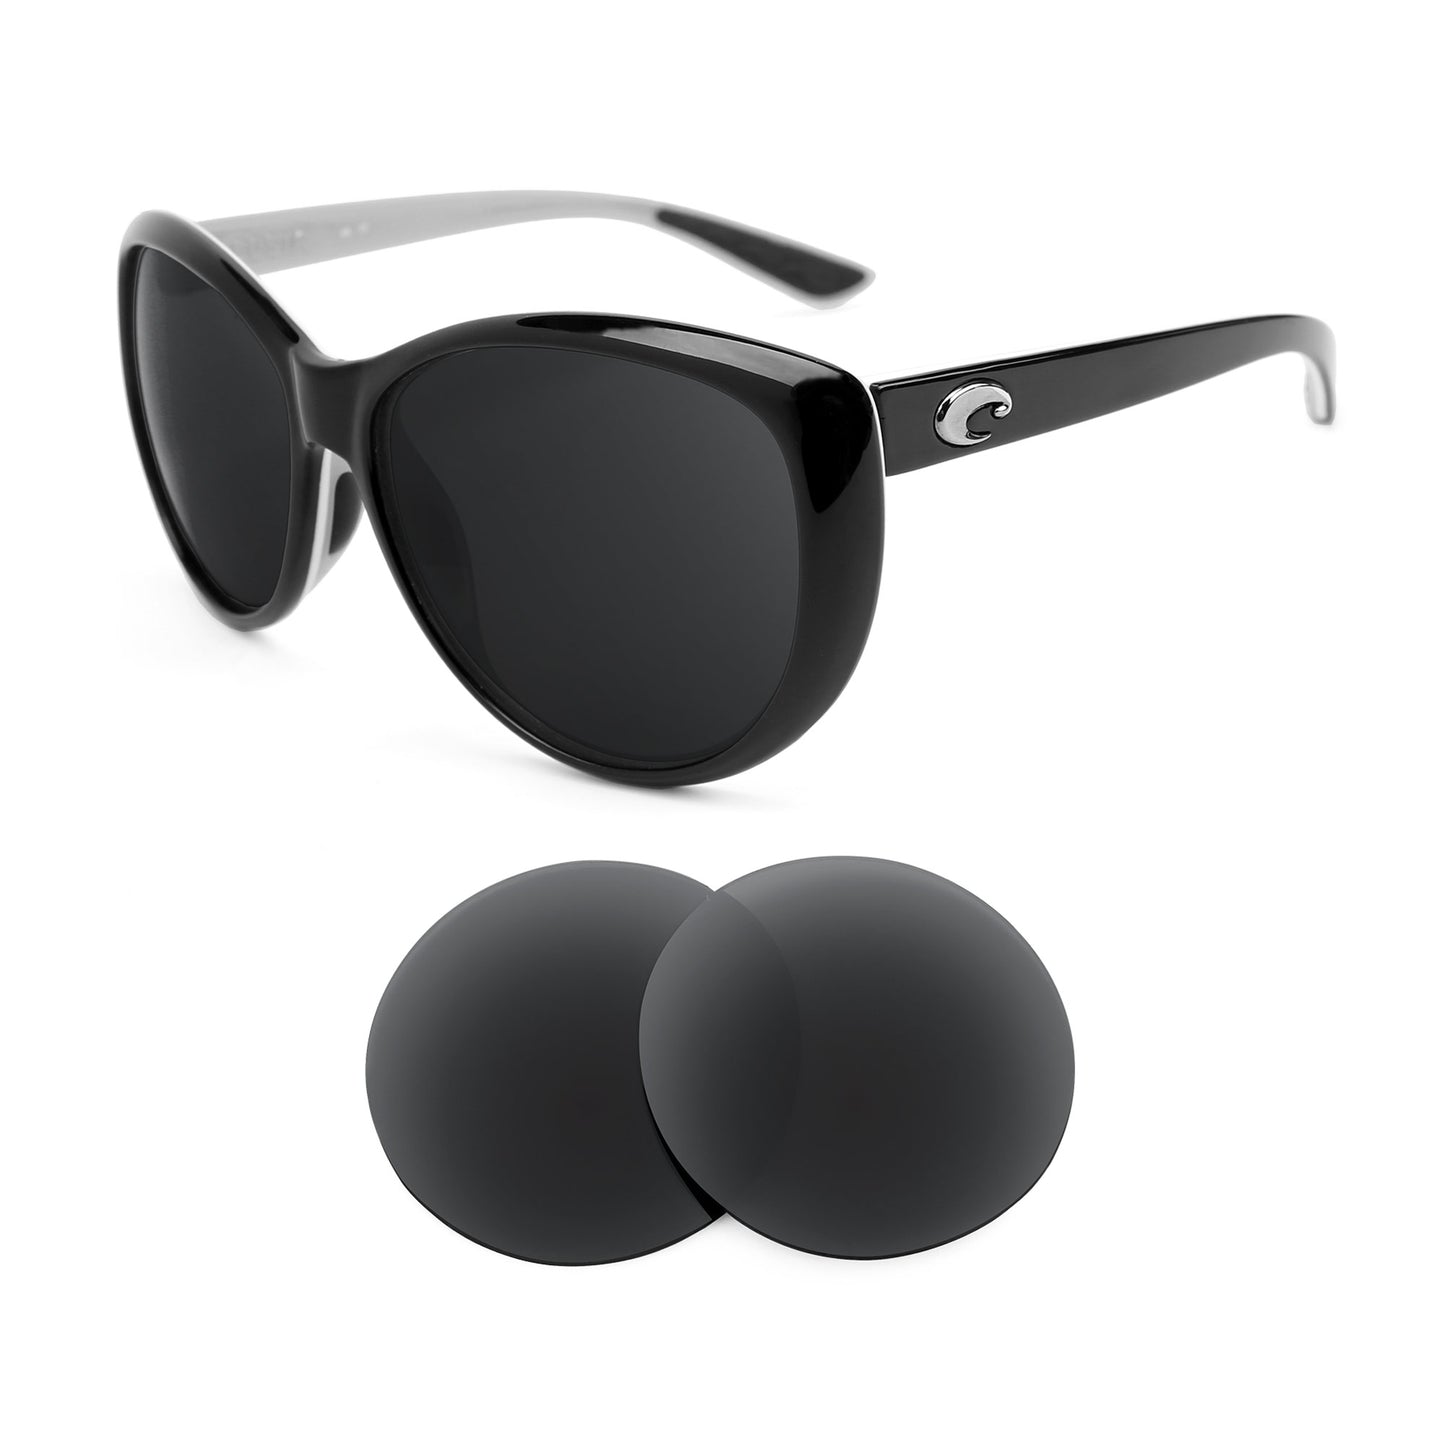 Costa La Mar sunglasses with replacement lenses